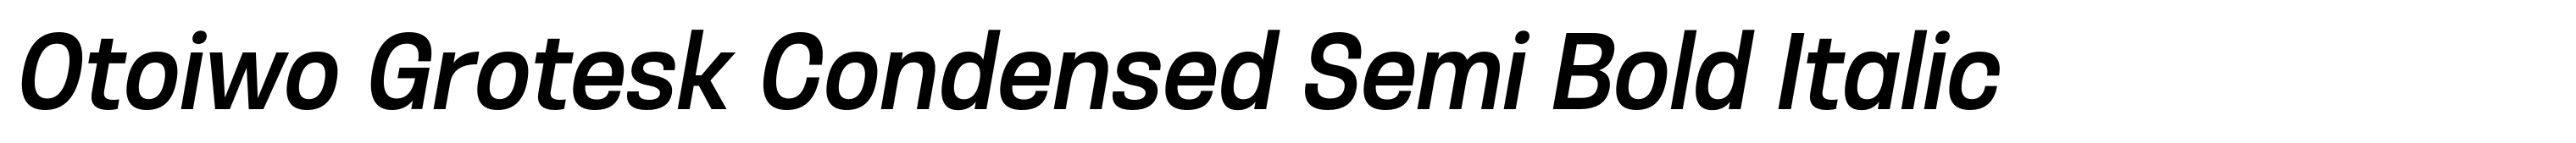 Otoiwo Grotesk Condensed Semi Bold Italic